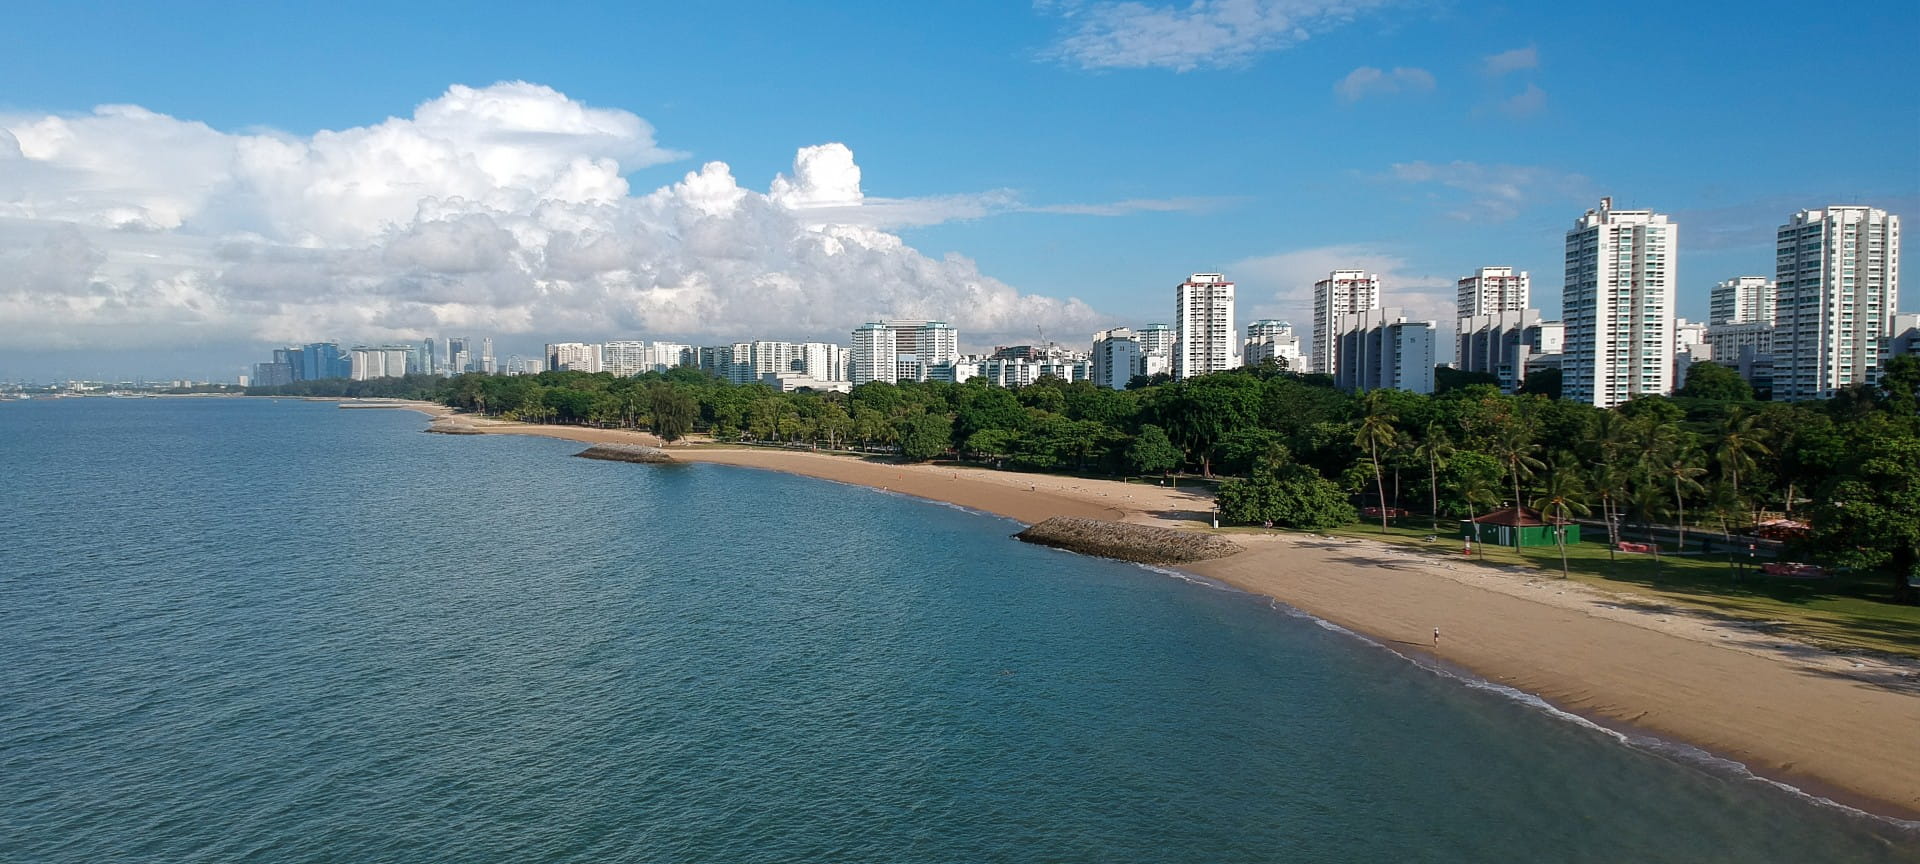 Coastal view of Singapore